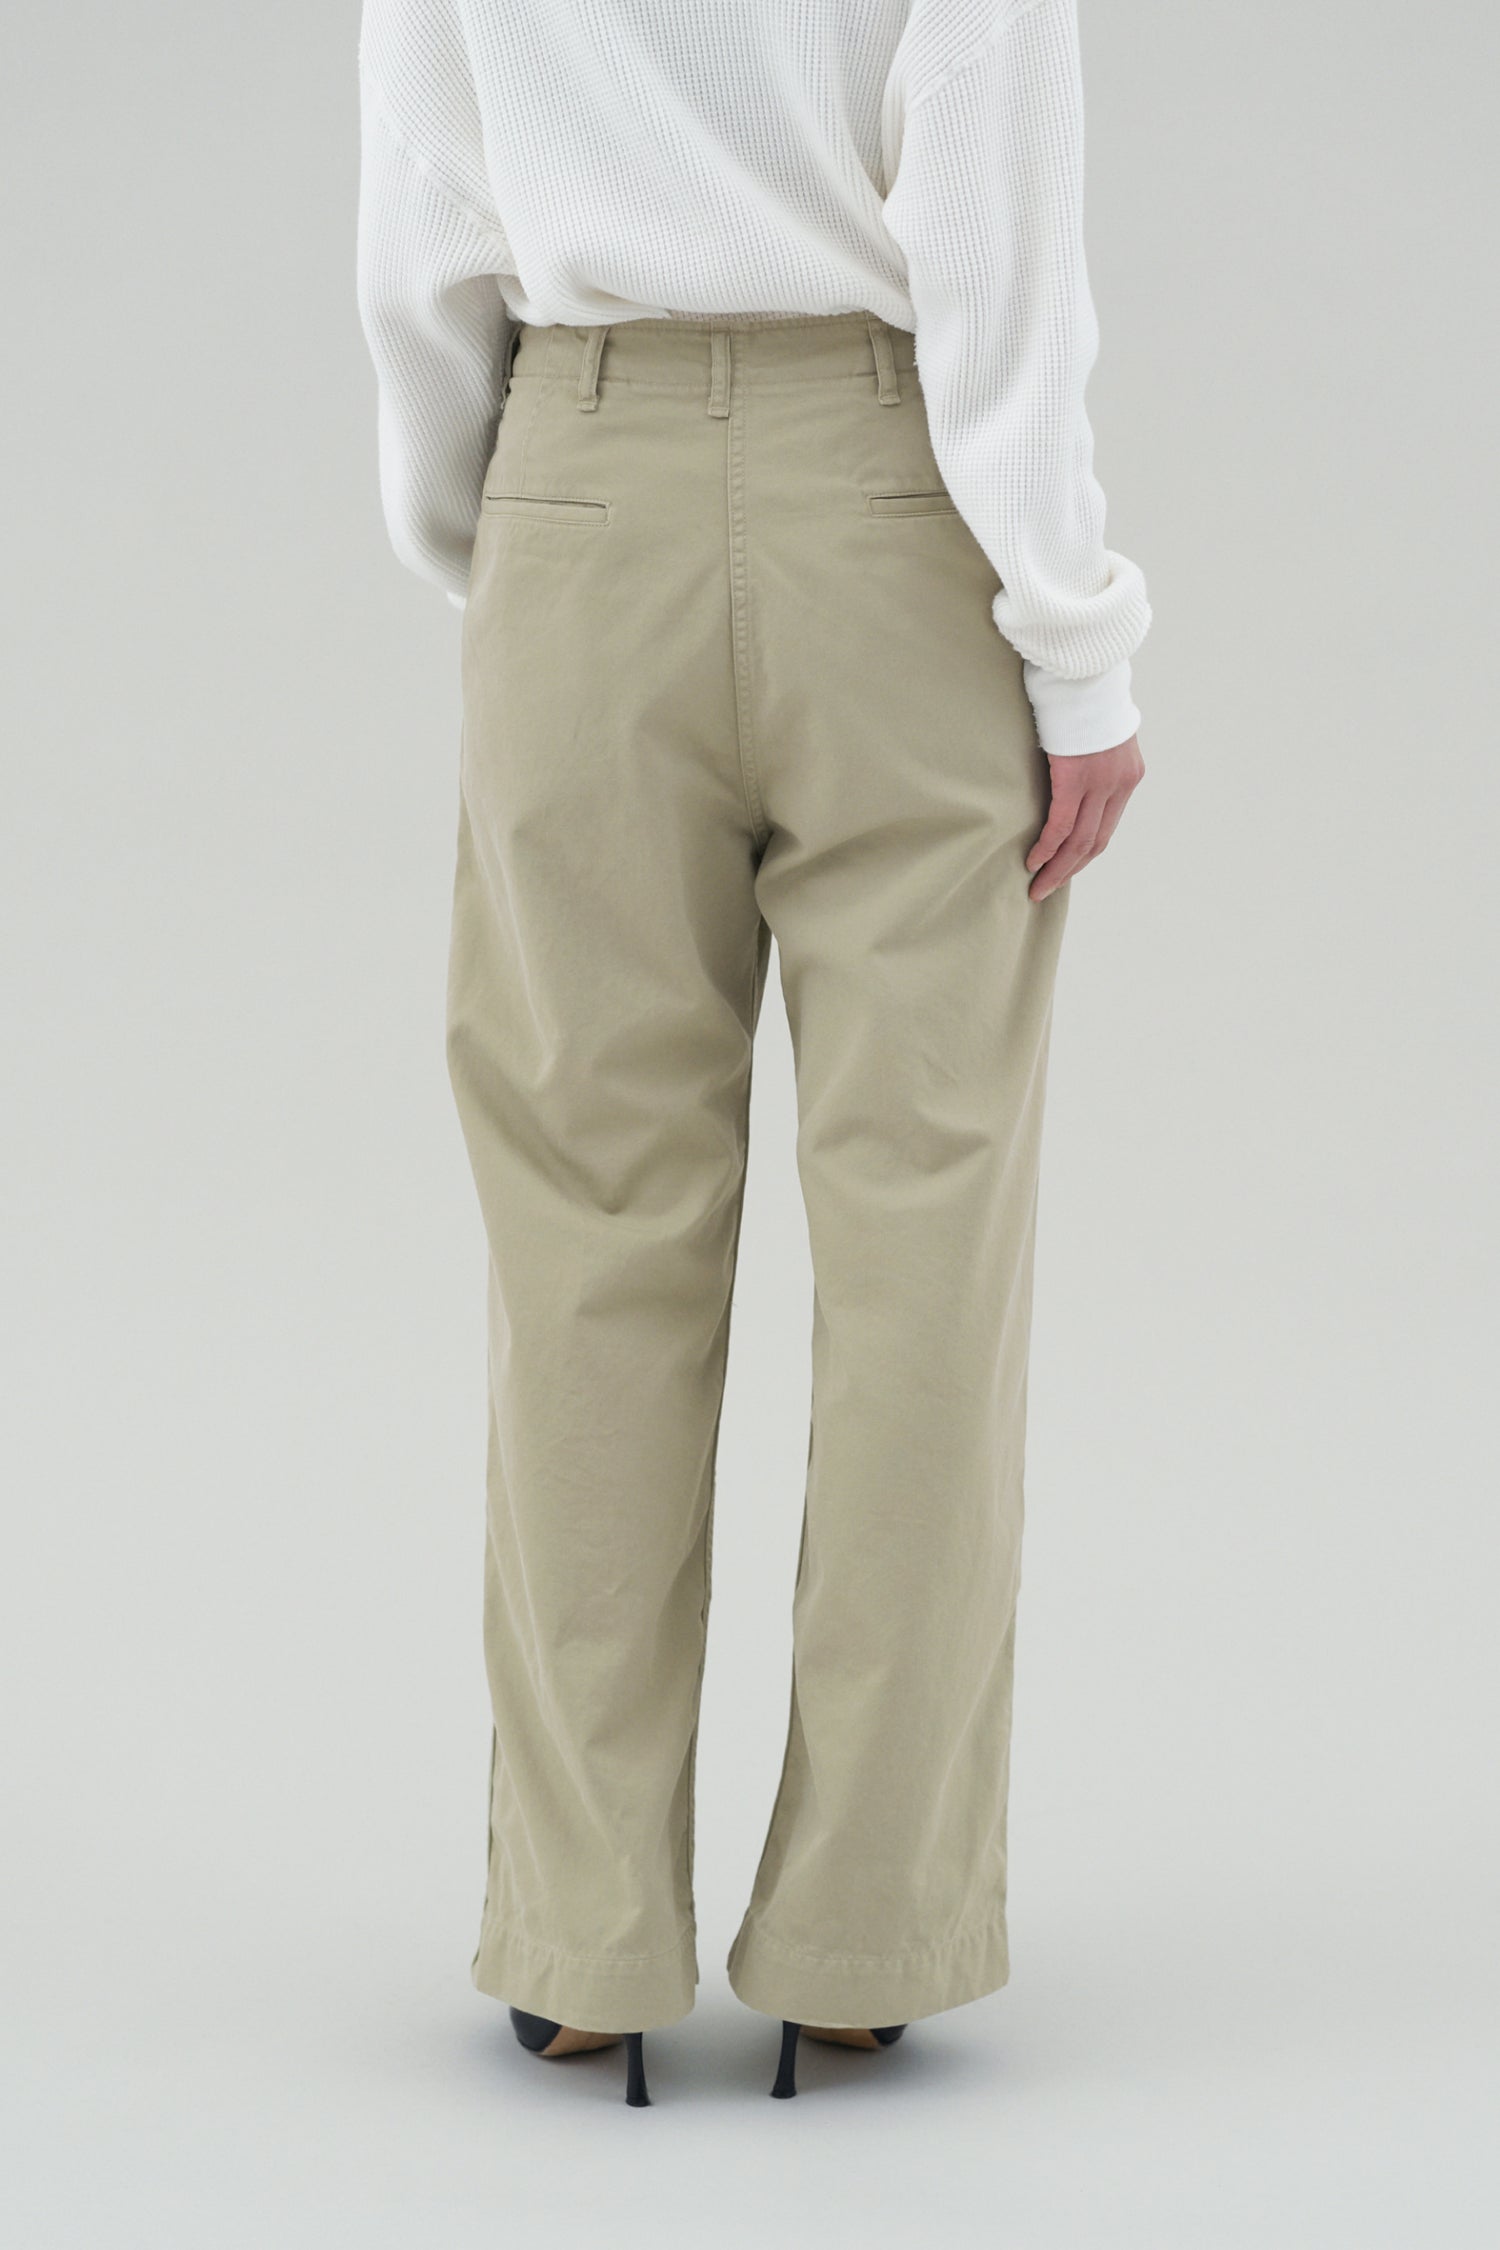 ciota Weapon Chino Cloth Pants(45 khaki)